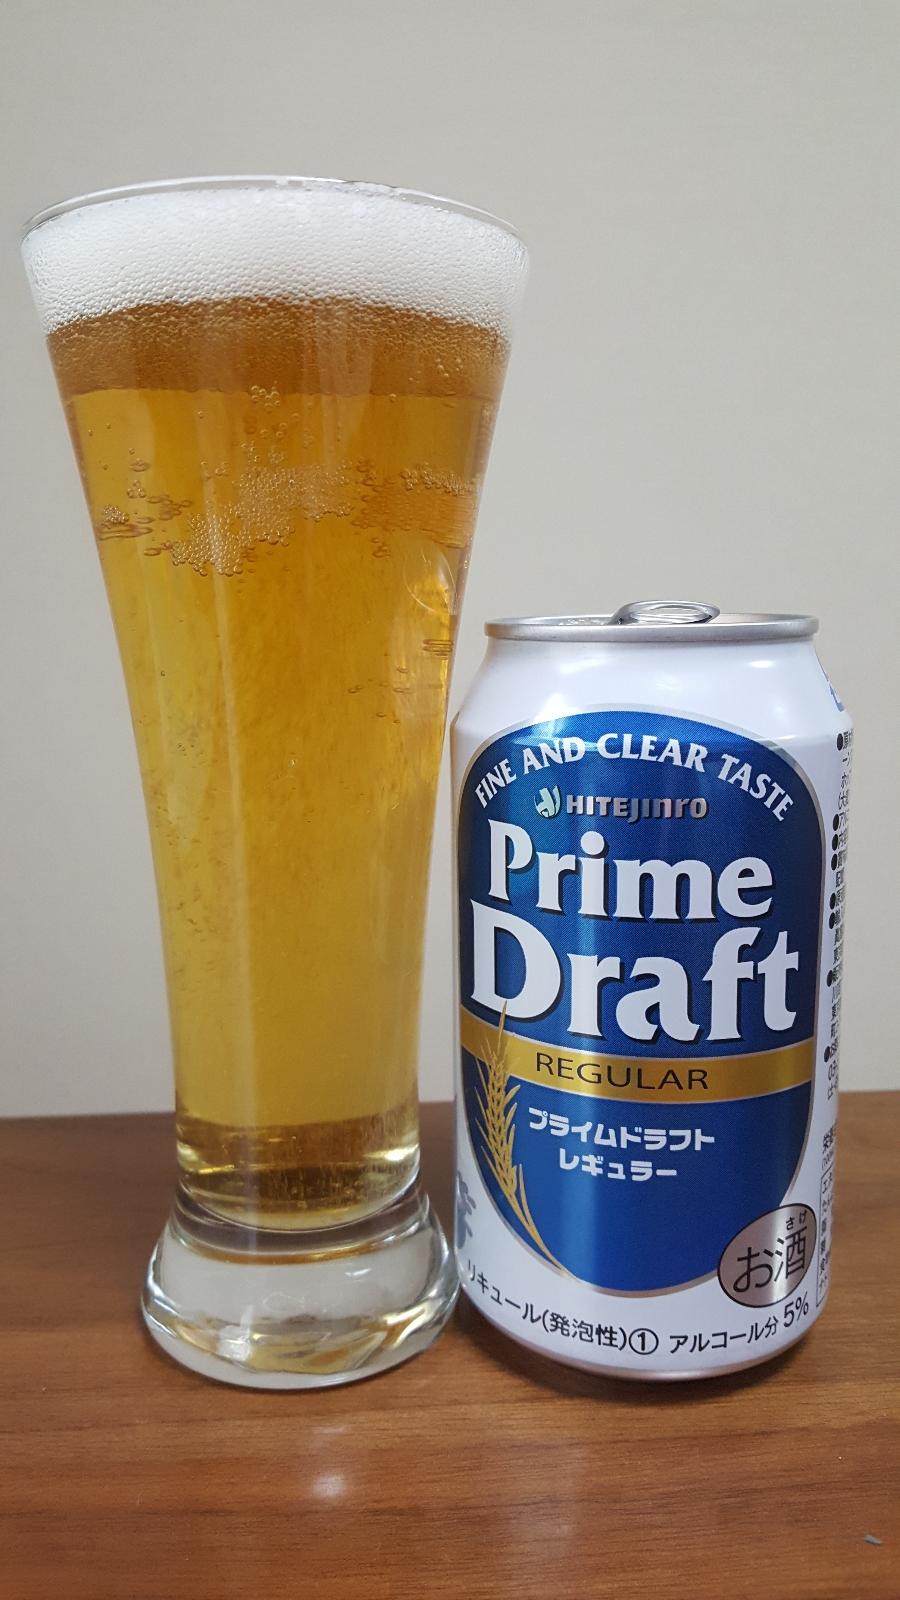 Prime Draft - Regular